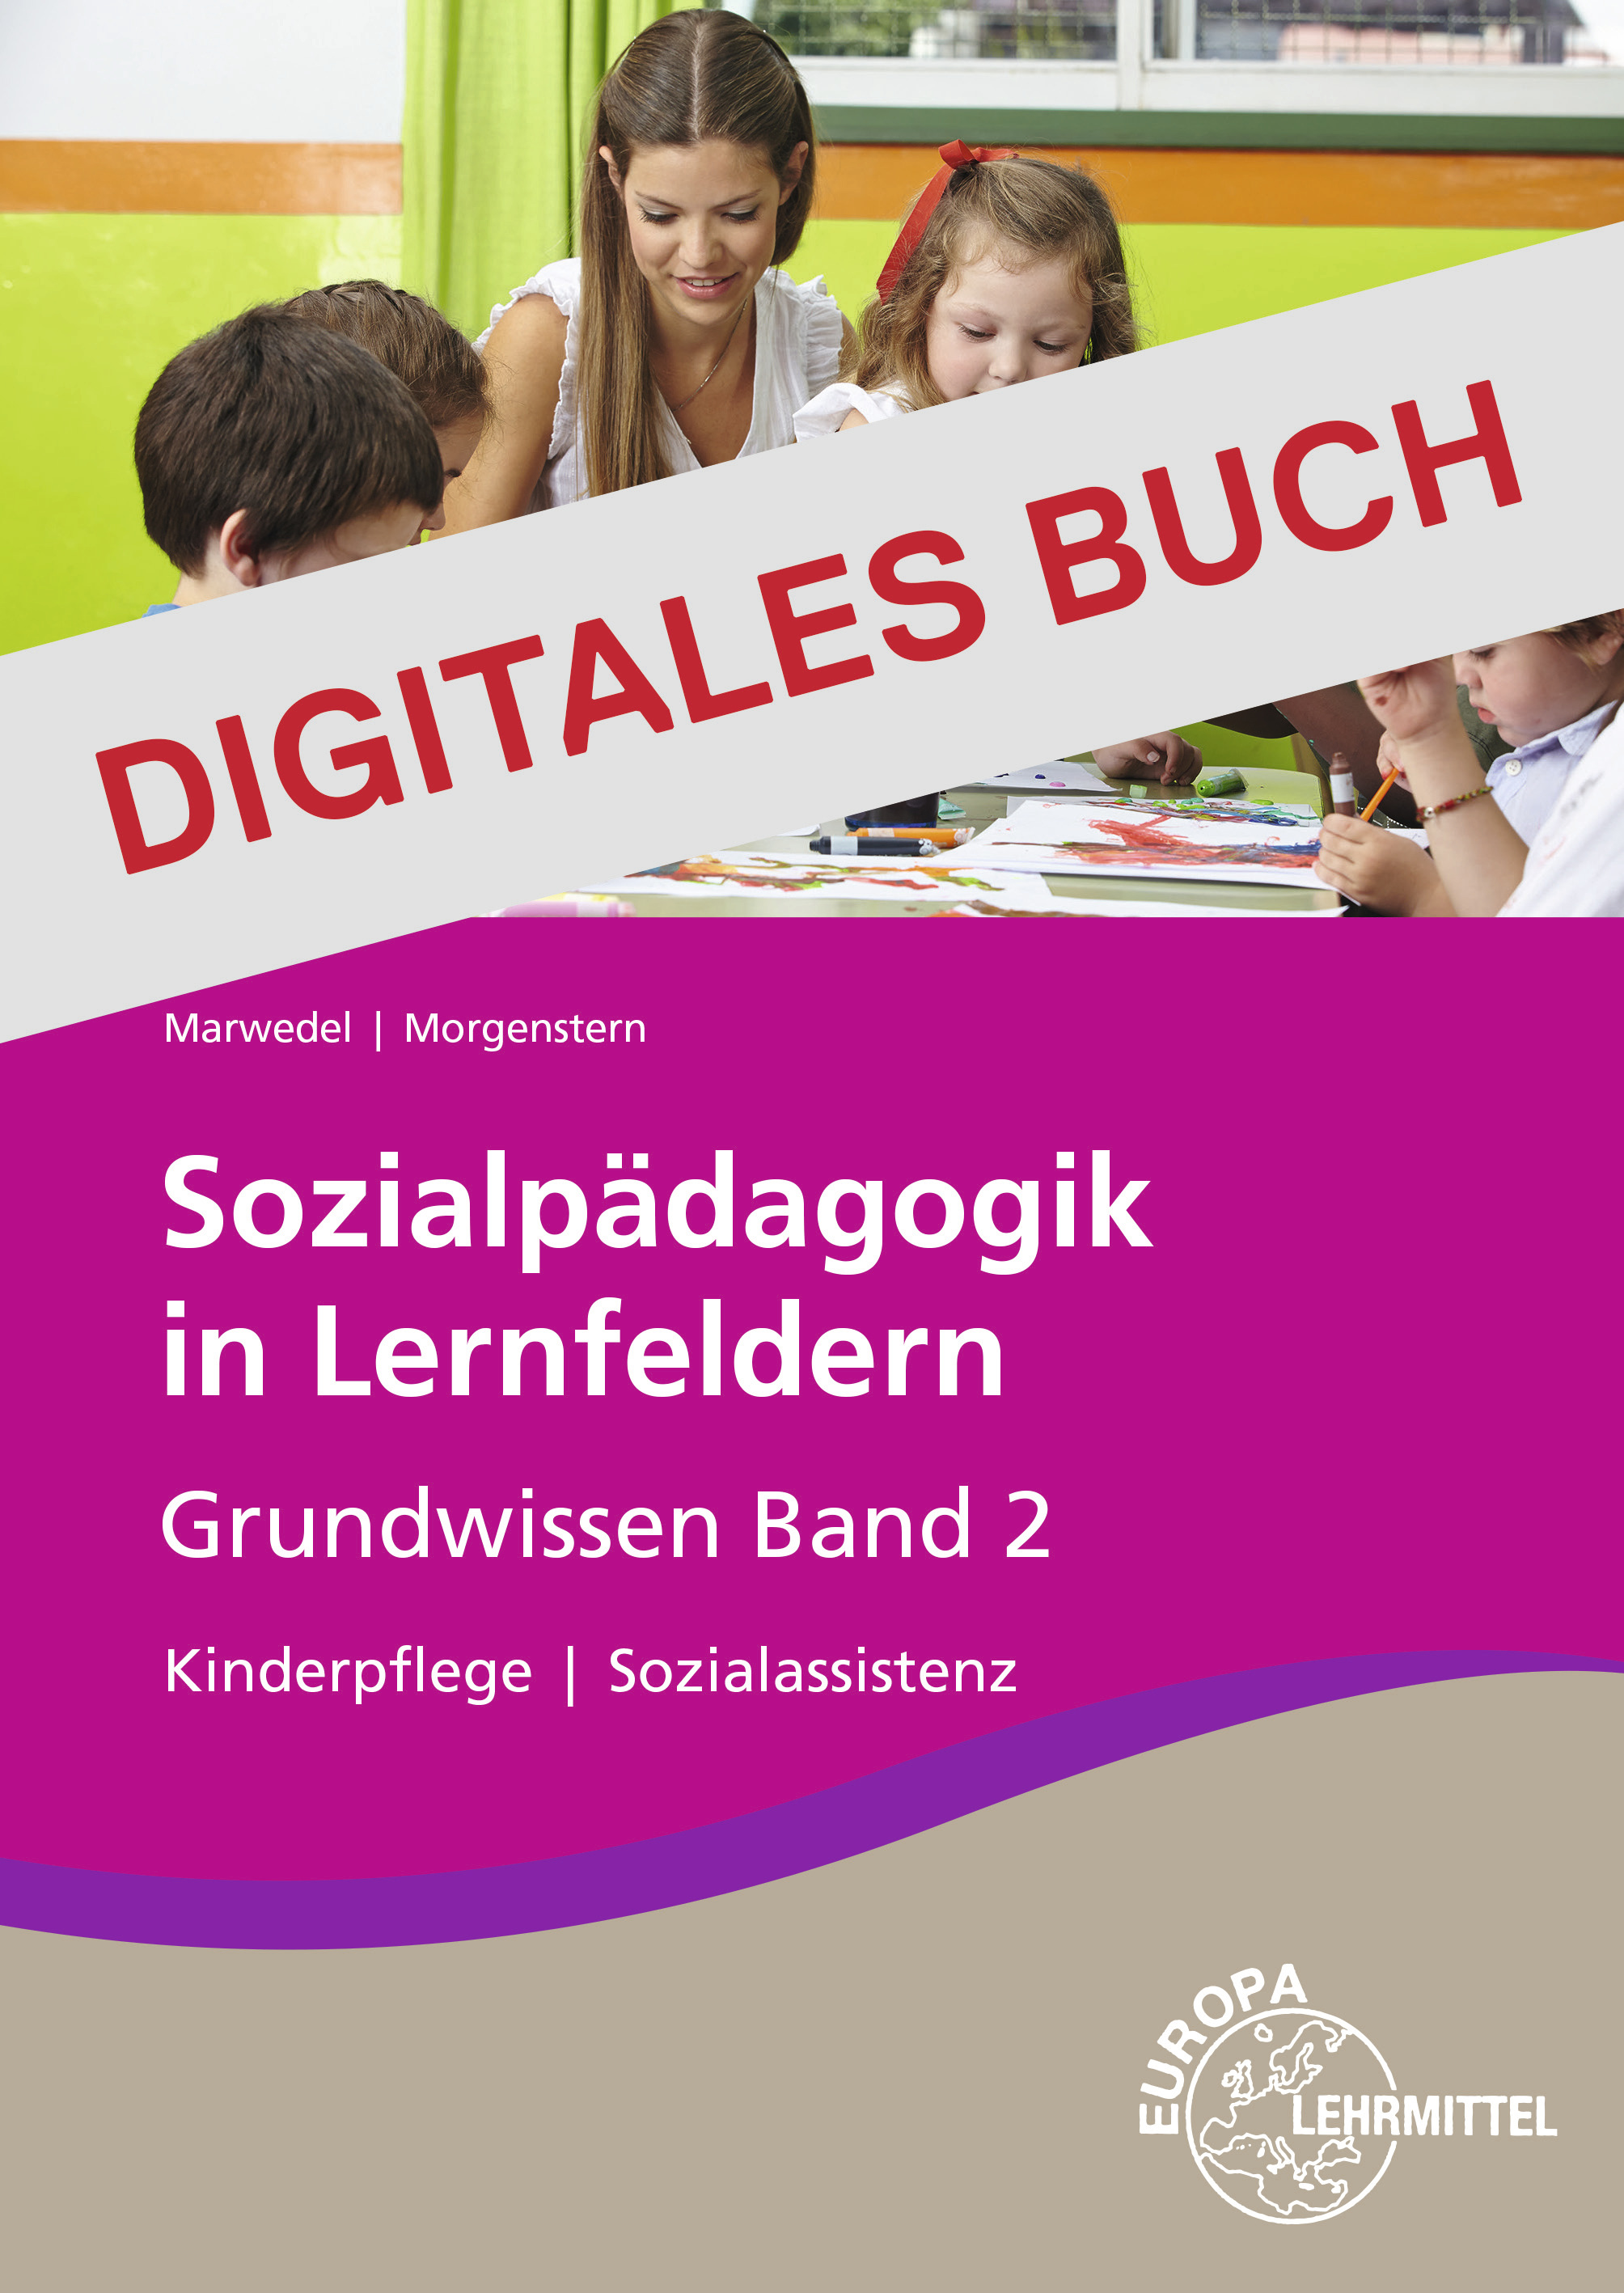 Sozialpädagogik in Lernfeldern Grundwissen Band 2 - Digitales Buch